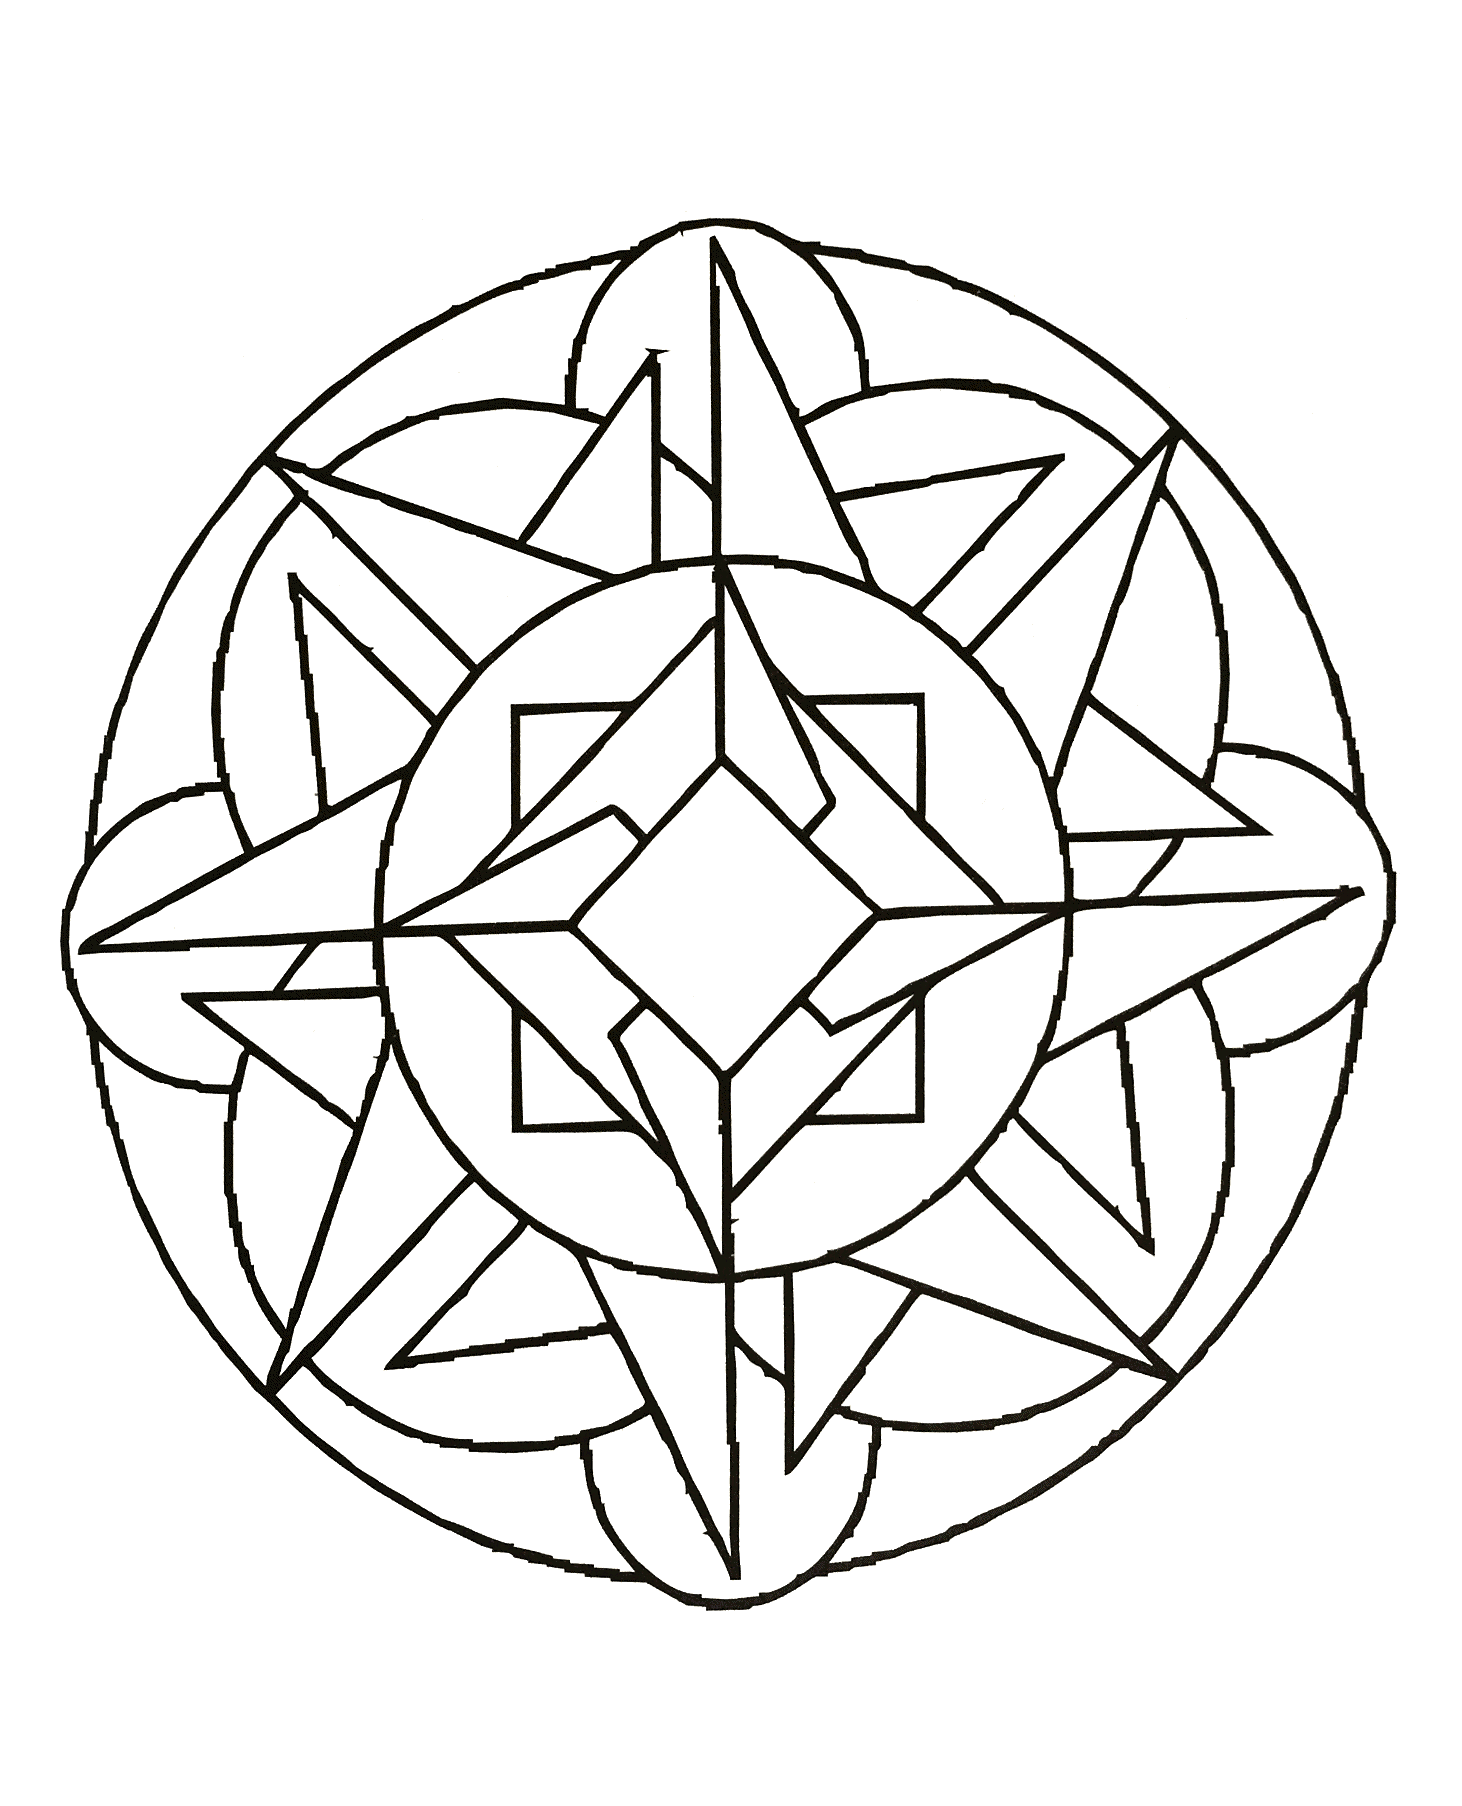 Simple Mandalas coloring page